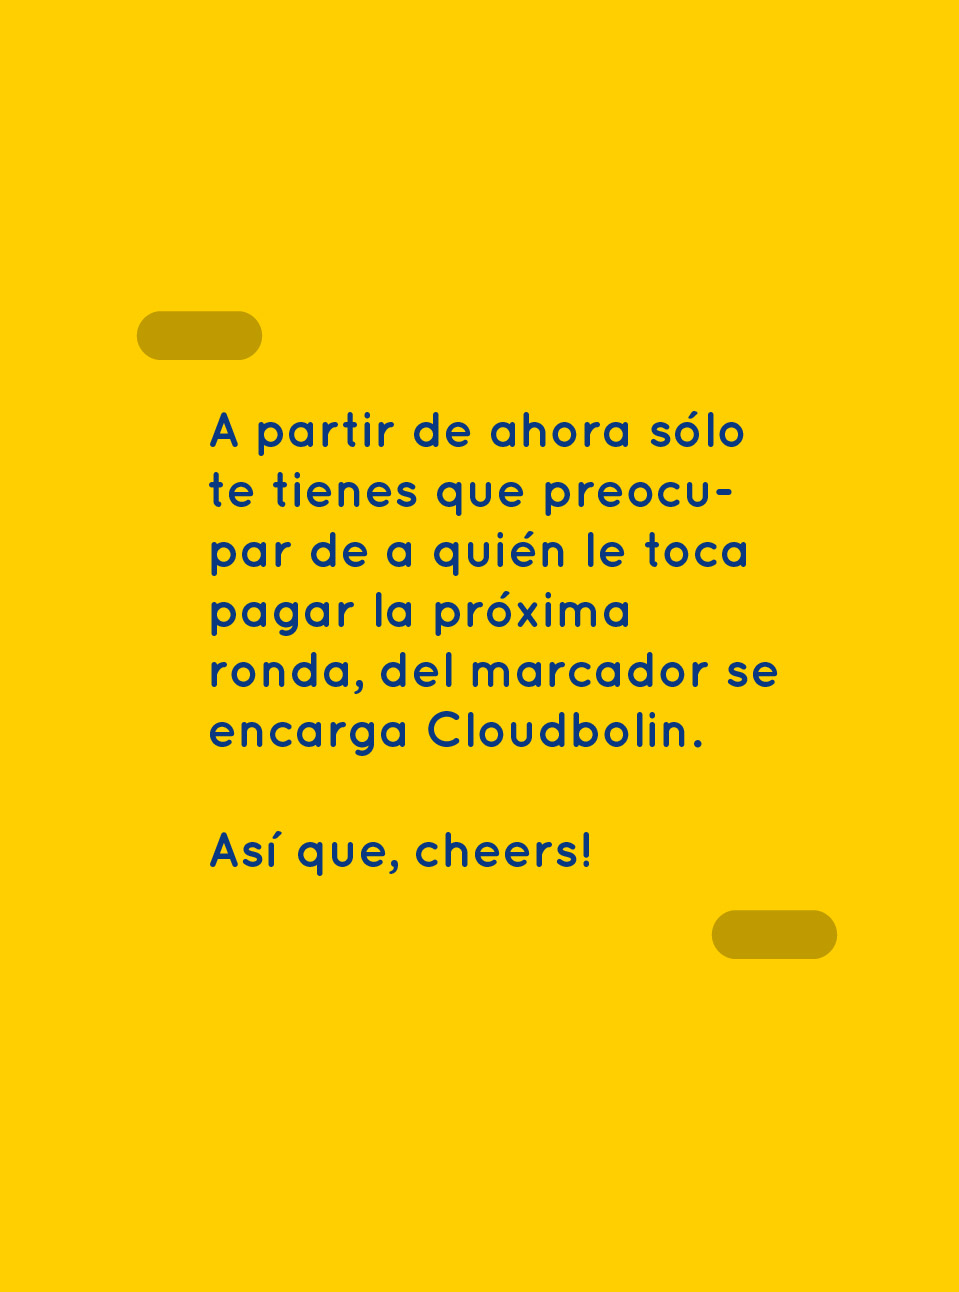 Cloudbolin Claim